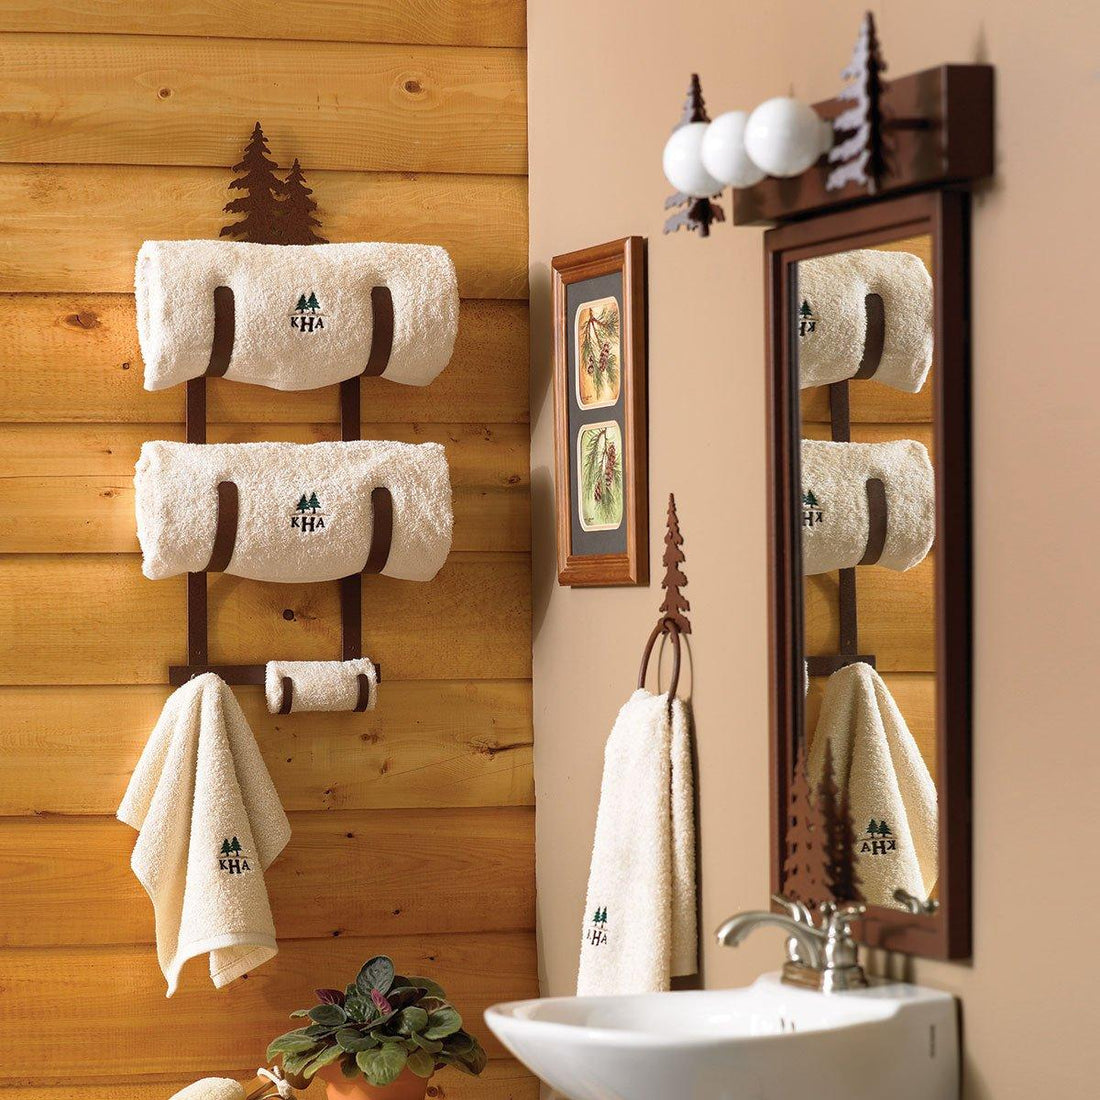 Simpli Disney Home Kitchen Towel Collection